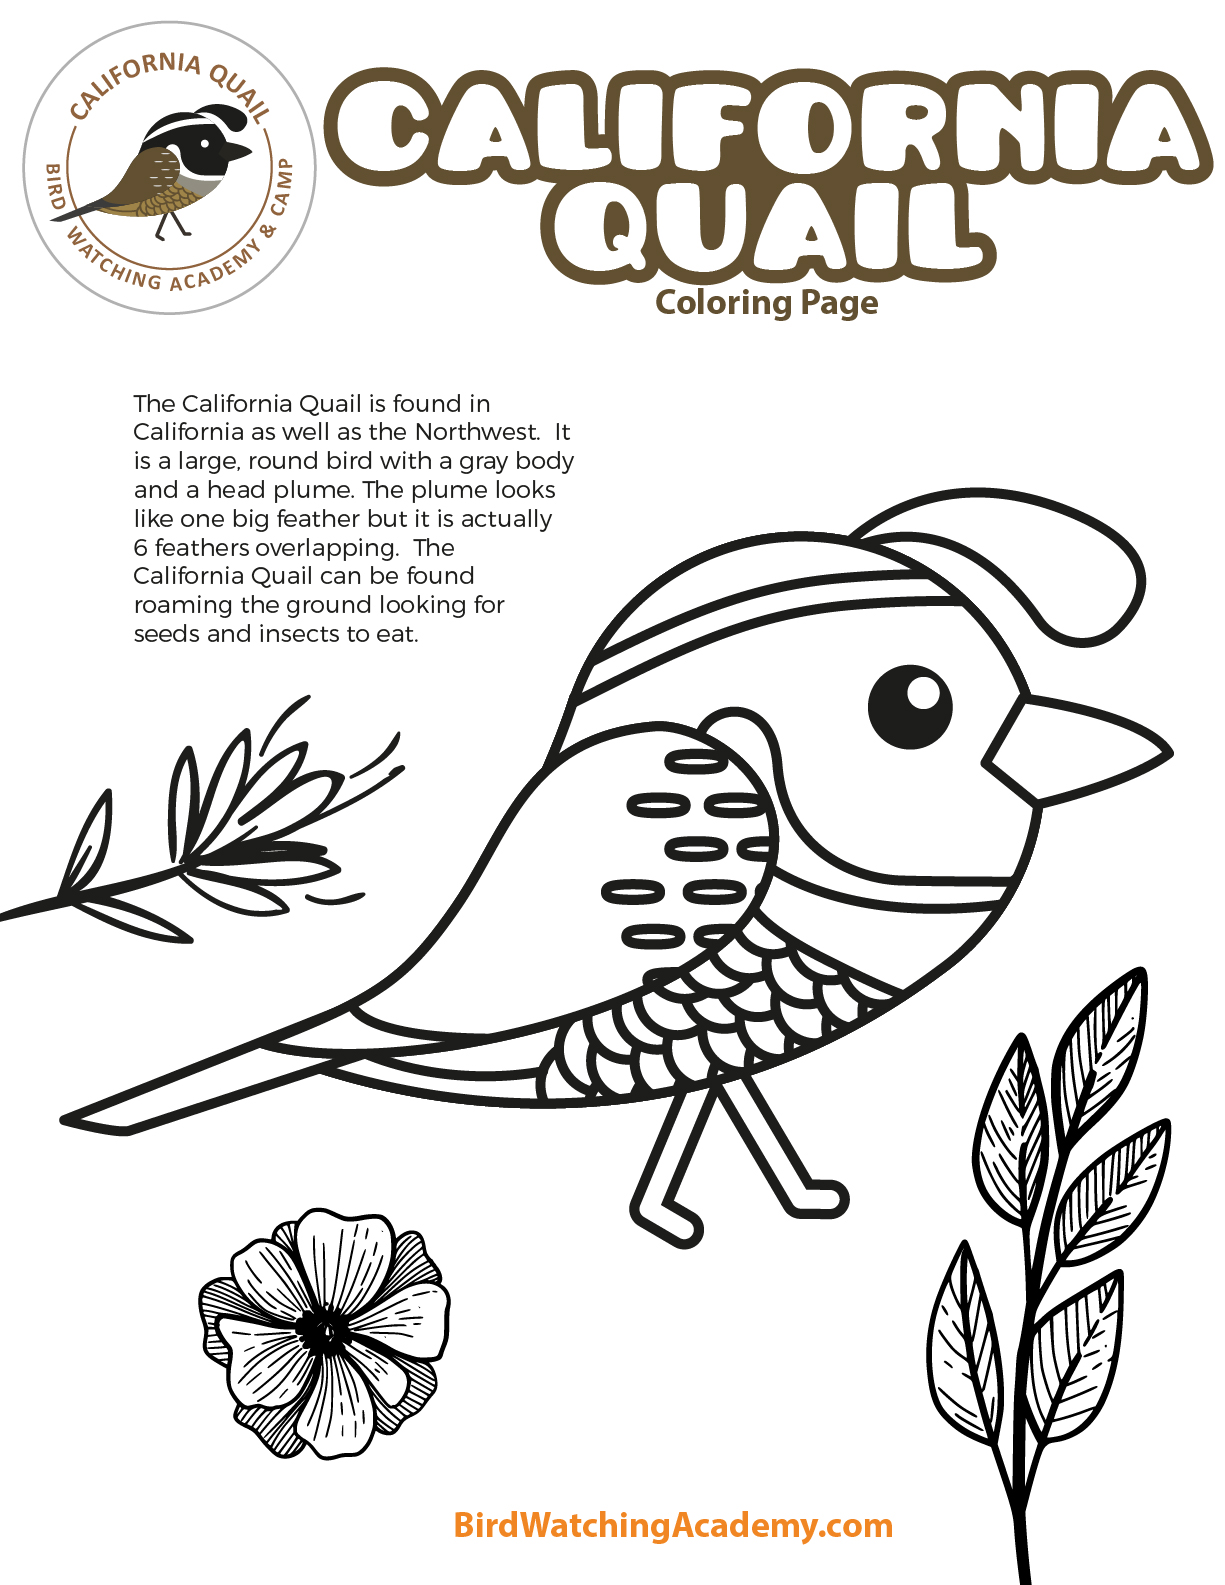 California quail coloring page